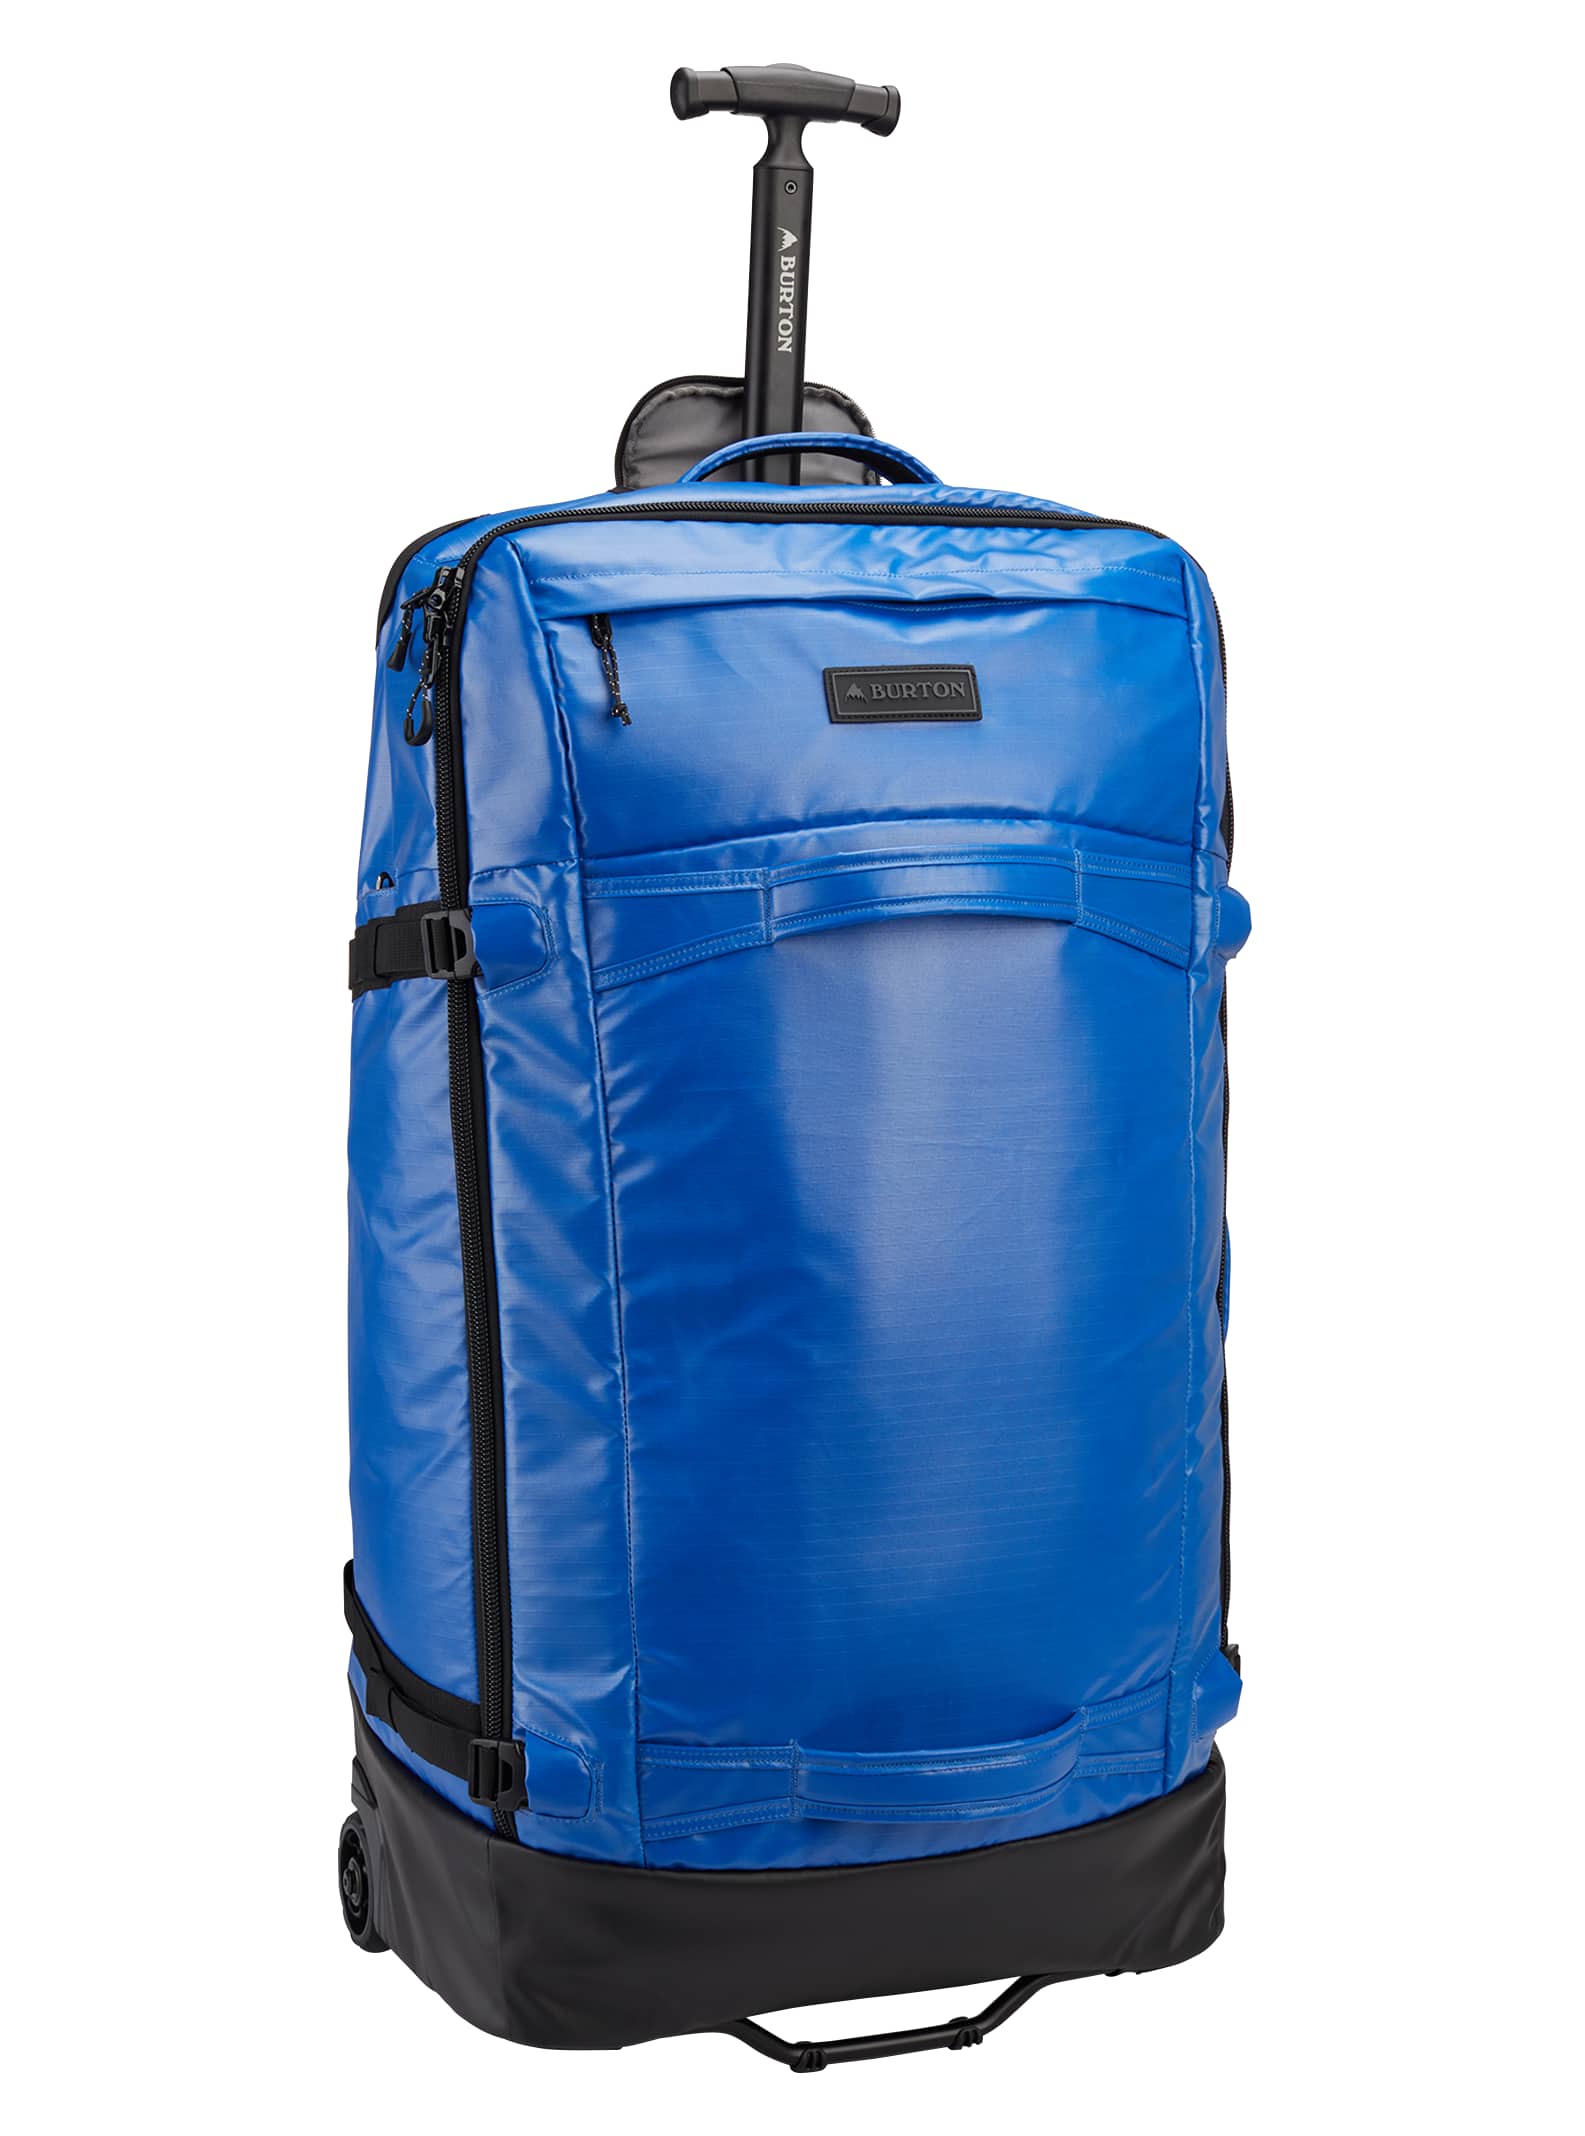 Burton / Multipath 90L Checked Travel Bag